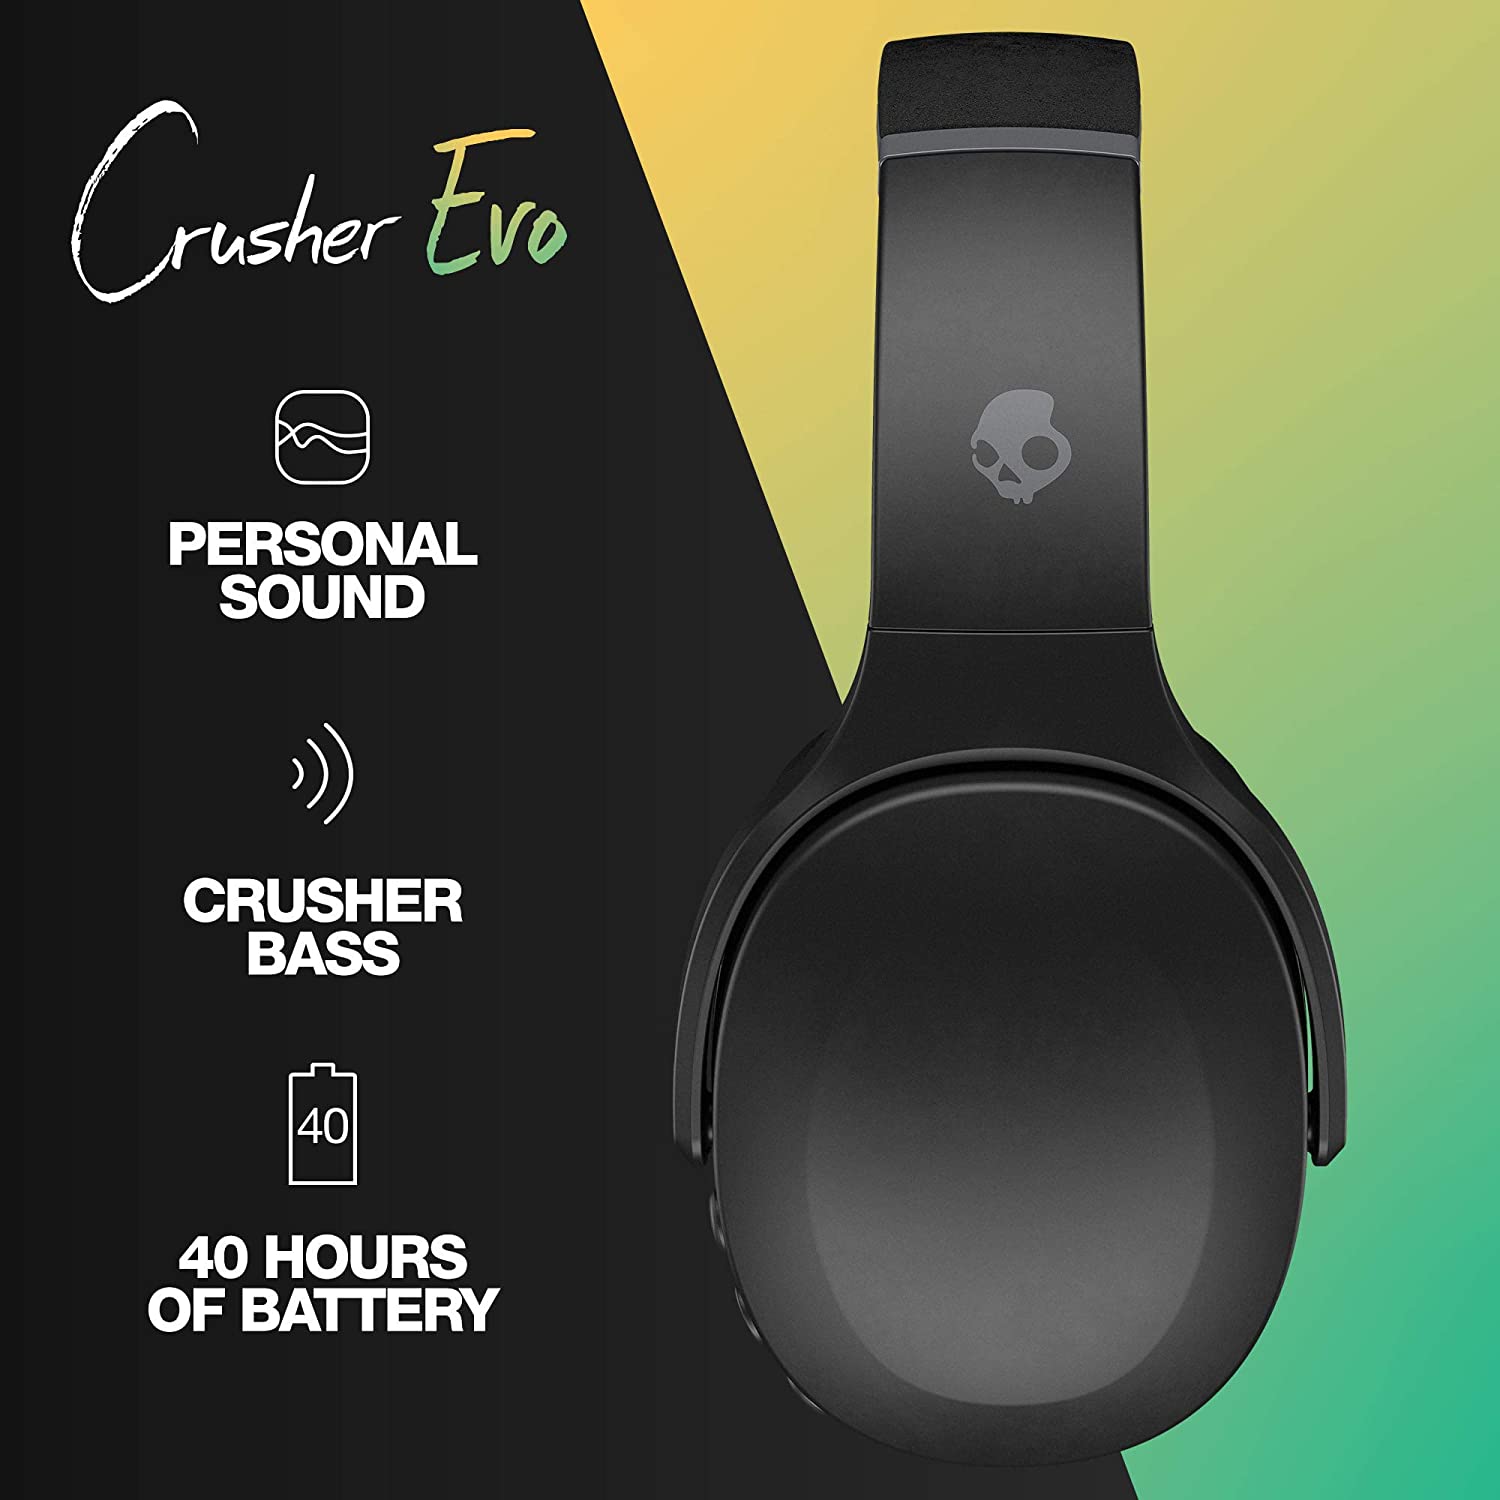 Skullcandy Crusher Evo Wireless Over-Ear Bluetooth Headphones